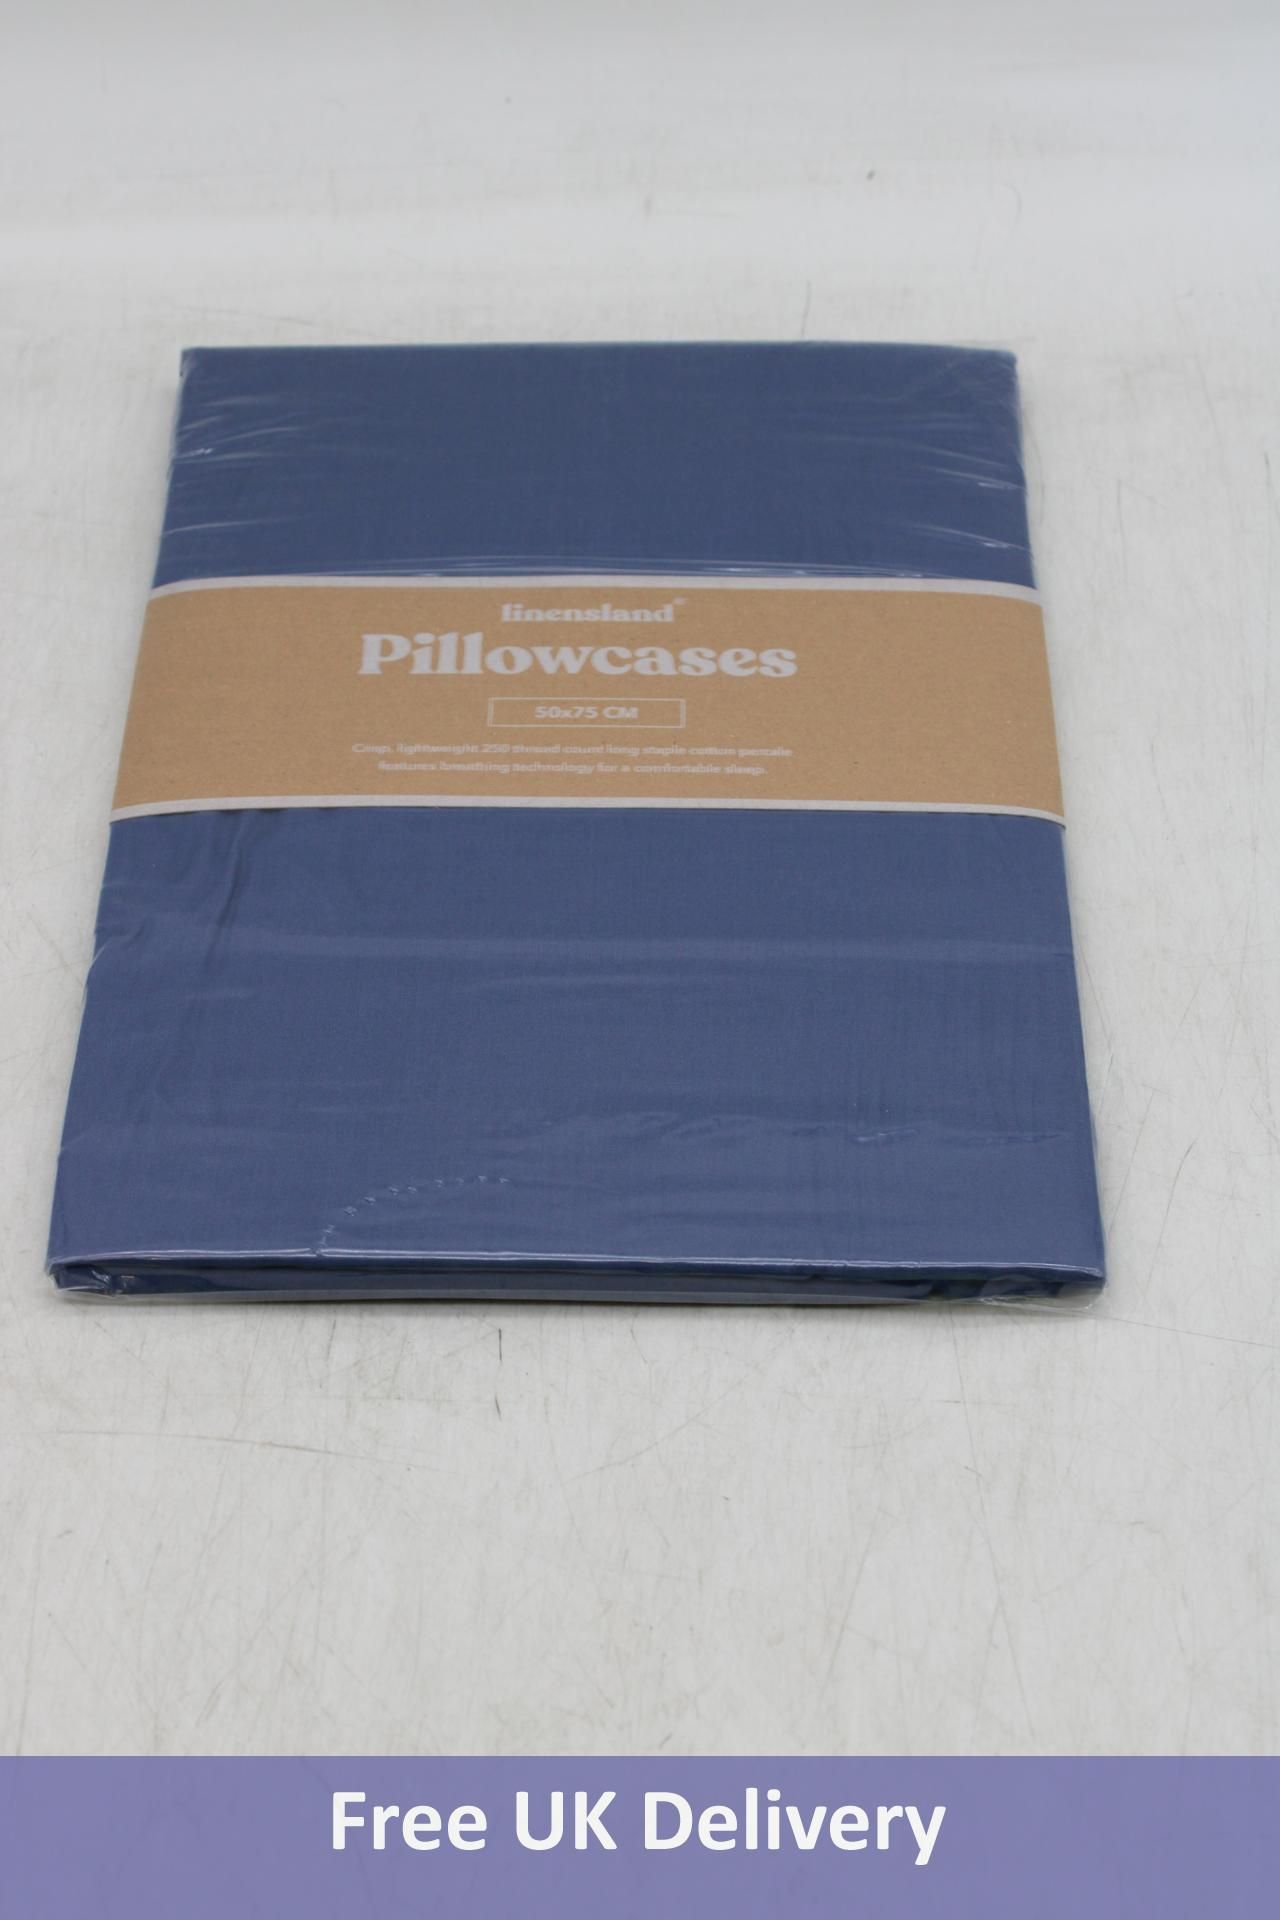 Twenty-five packs of Linensland Pillowcase, Navy, 50 x 75 cm, 4 per pack - Image 5 of 5